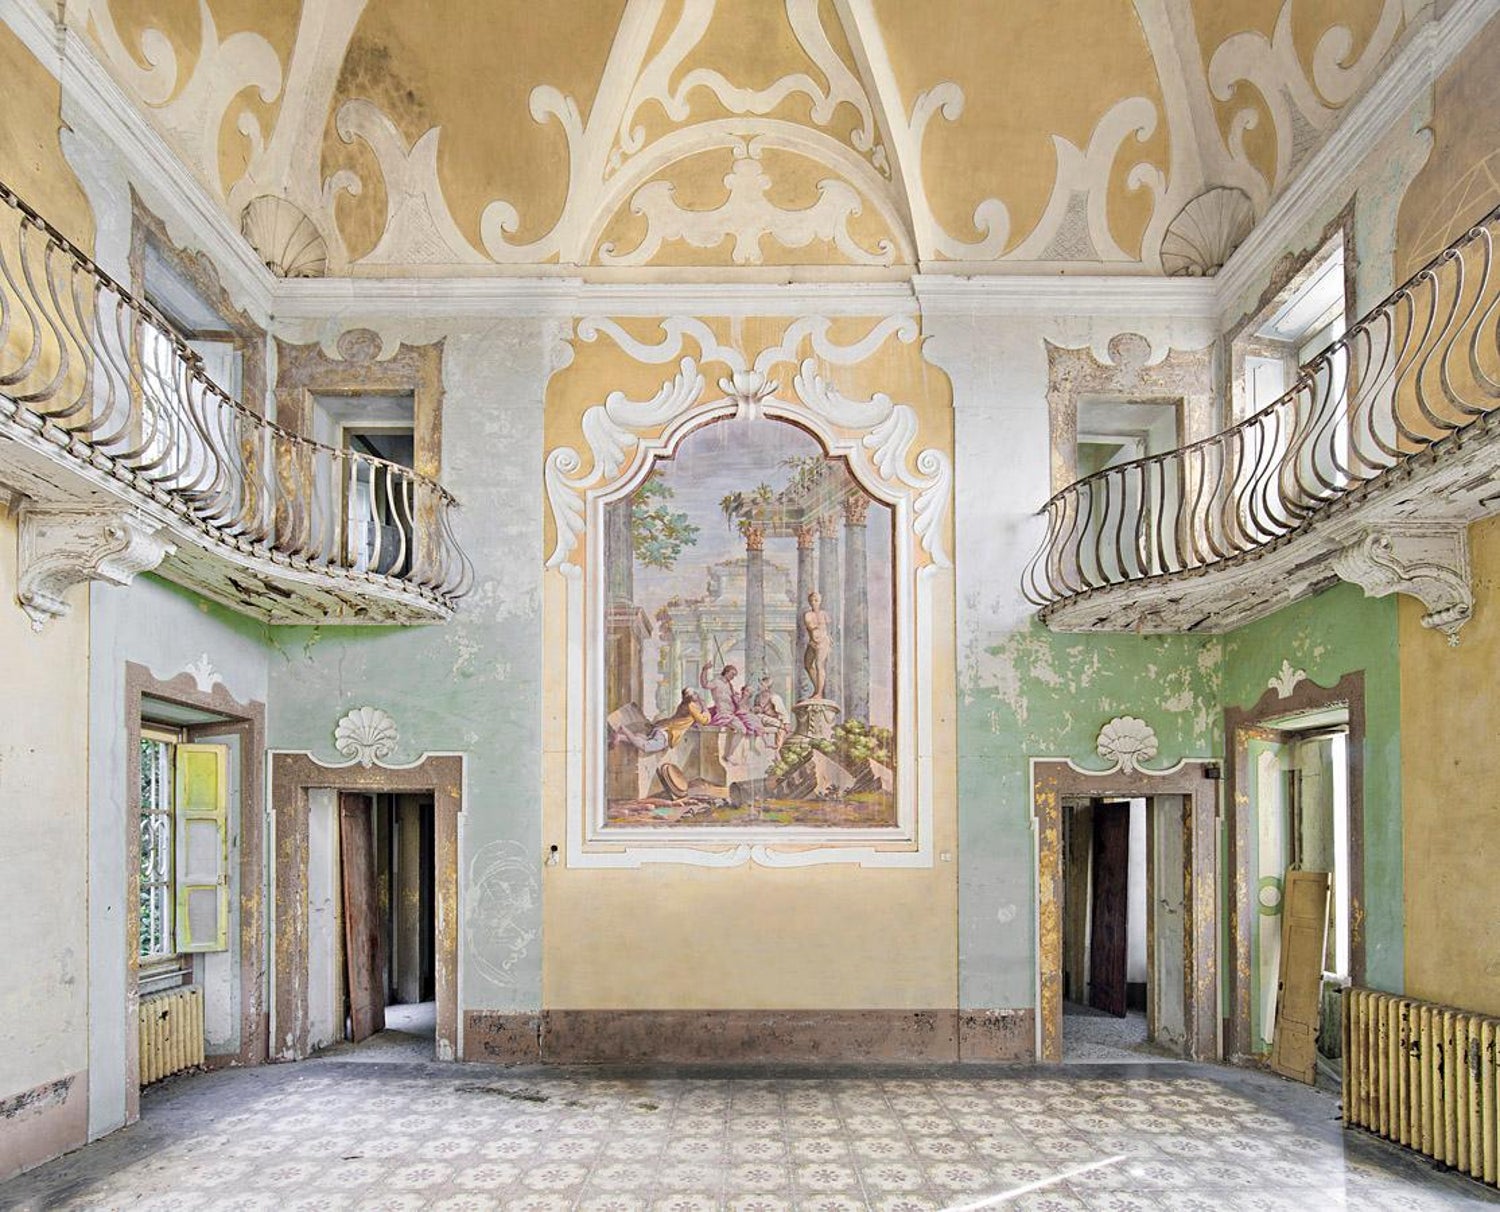 Reggia di Venaria Reale, Torino, Italy by David Burdeny